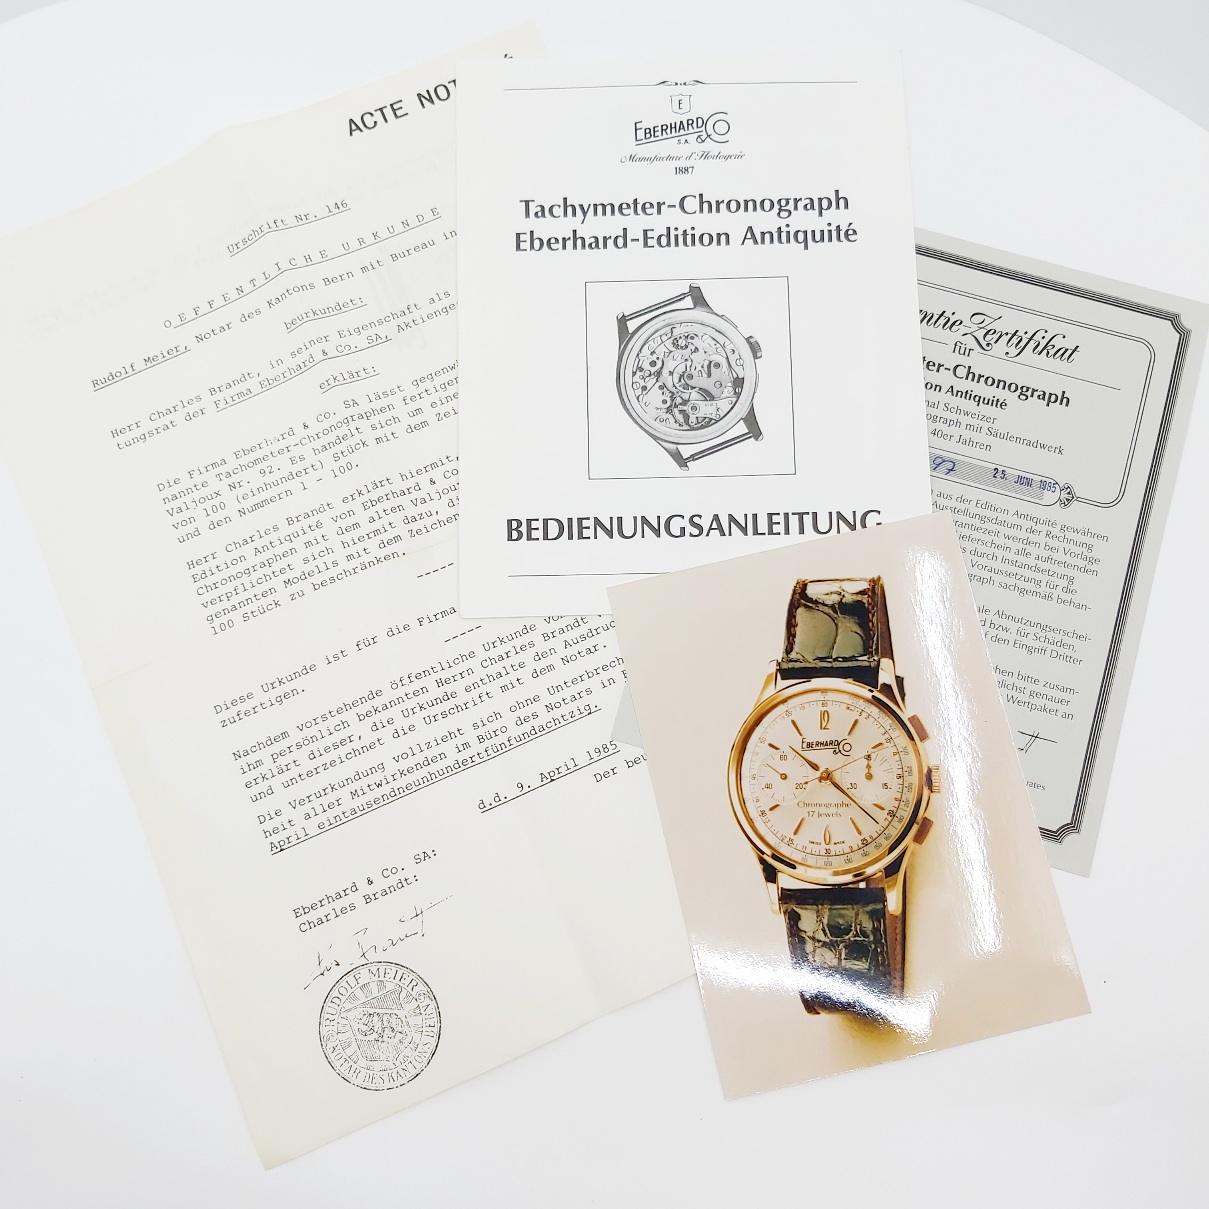 1 Armbanduhr Eberhard u. CO Chrono, limitiert, Lederband, Papierer